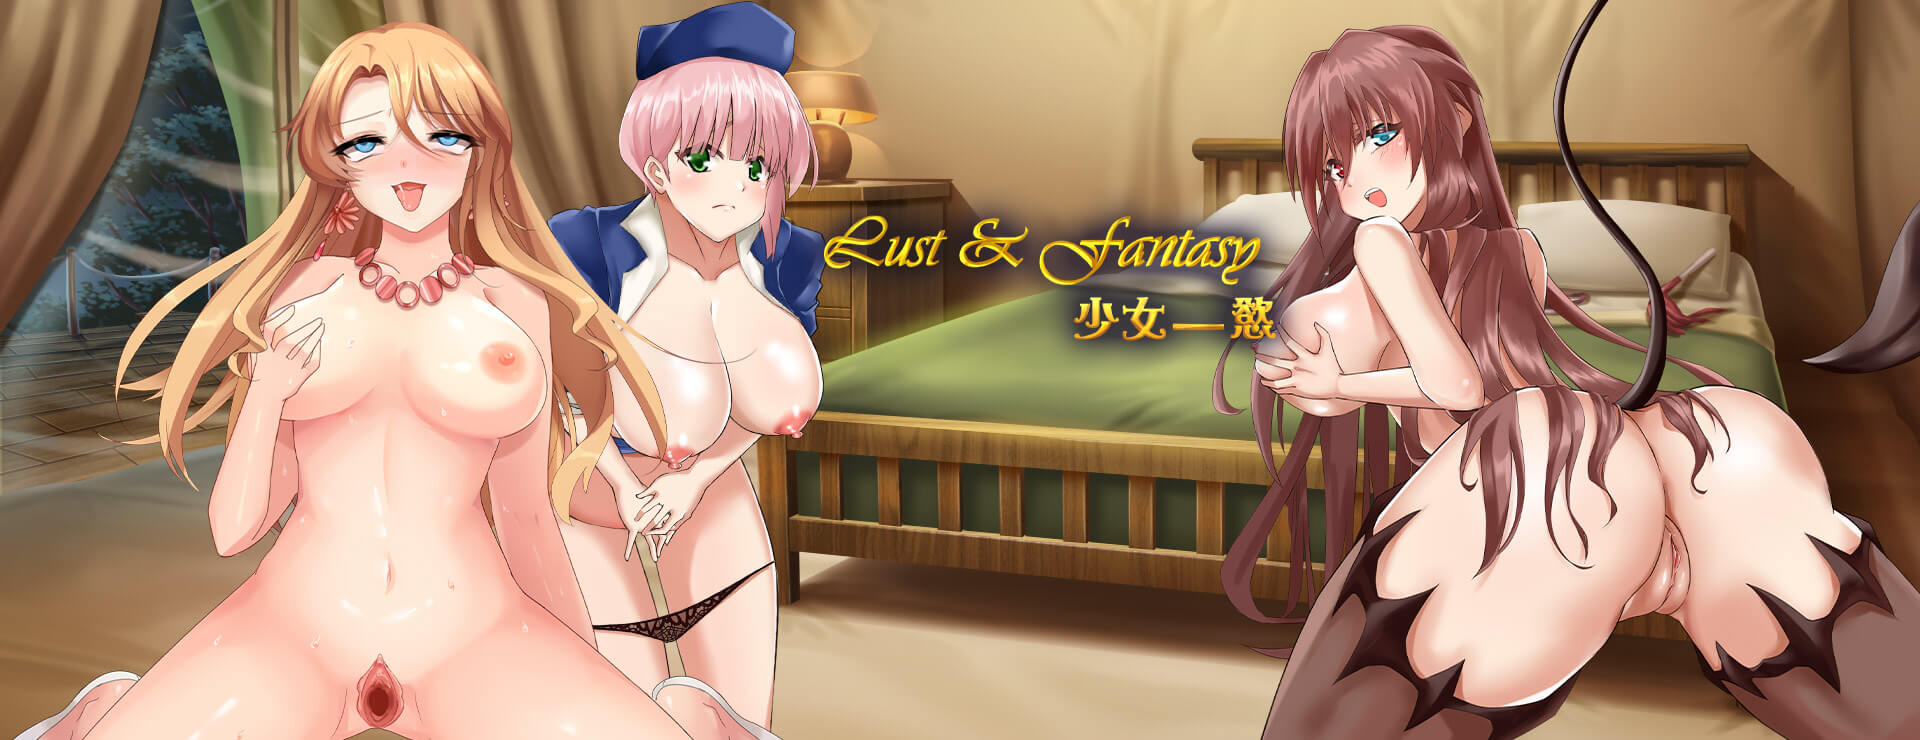 Lust & Fantasy - RPG Spiel